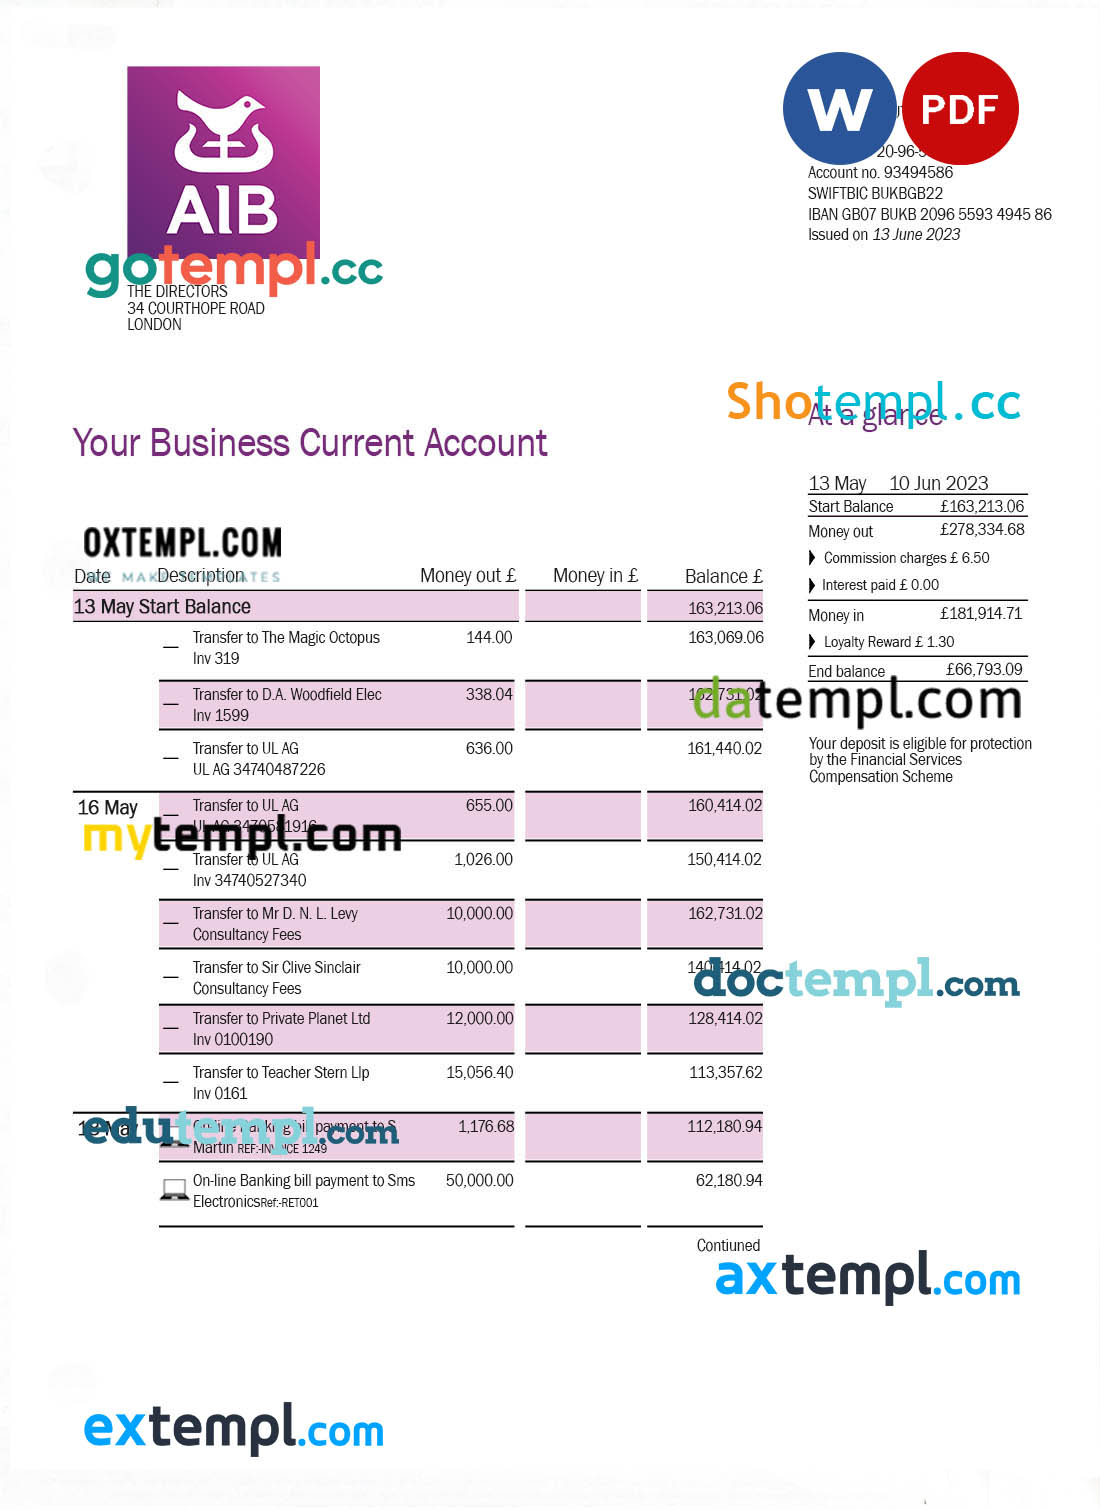 Allied Irish Banks (AIB) enterprise statement Word and PDF template